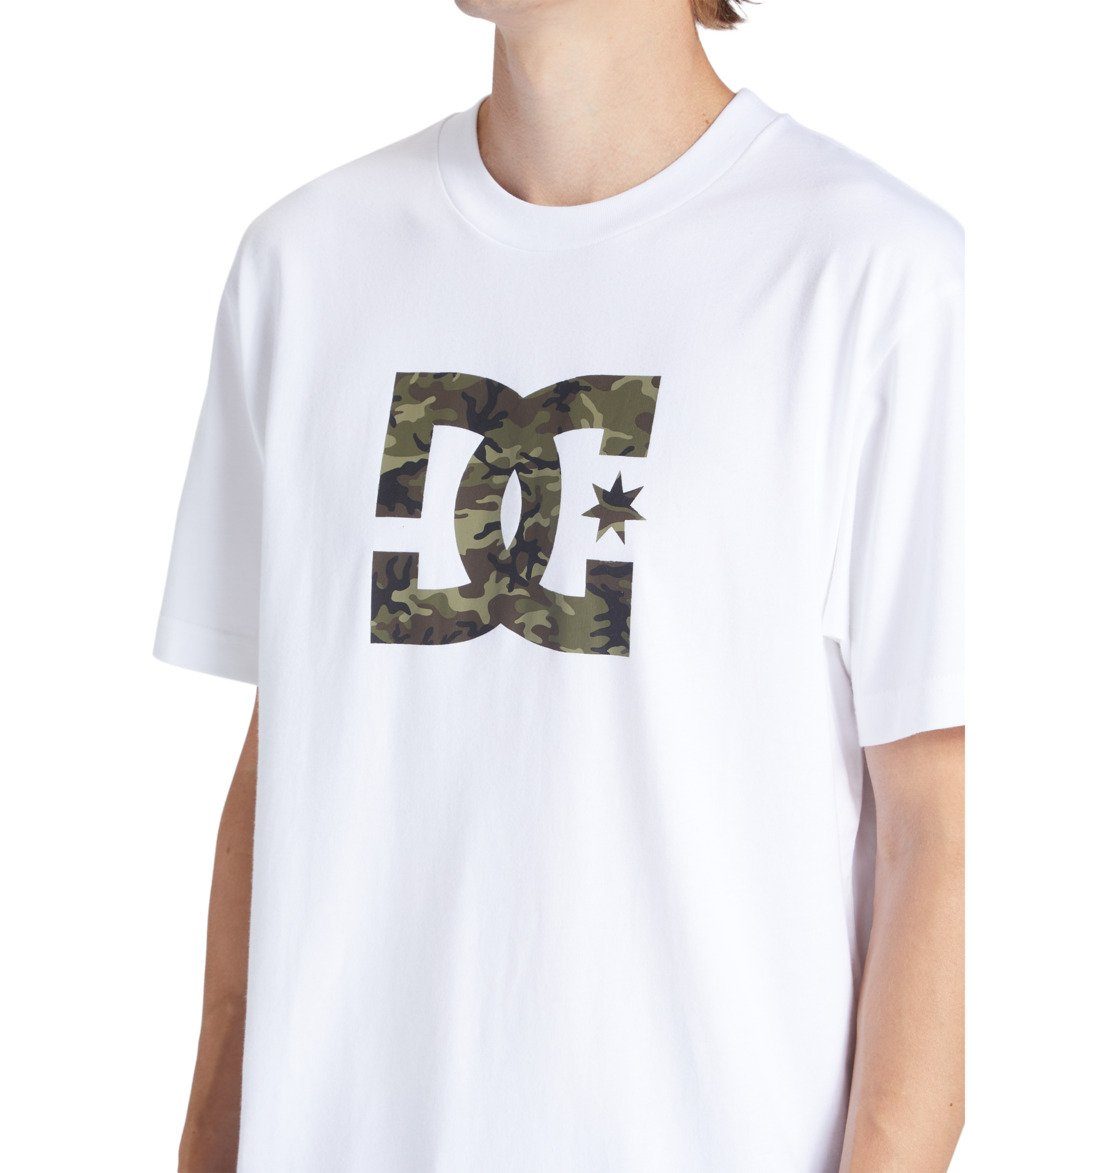 Fill Shoes DC DC T-Shirt Star White/Camo